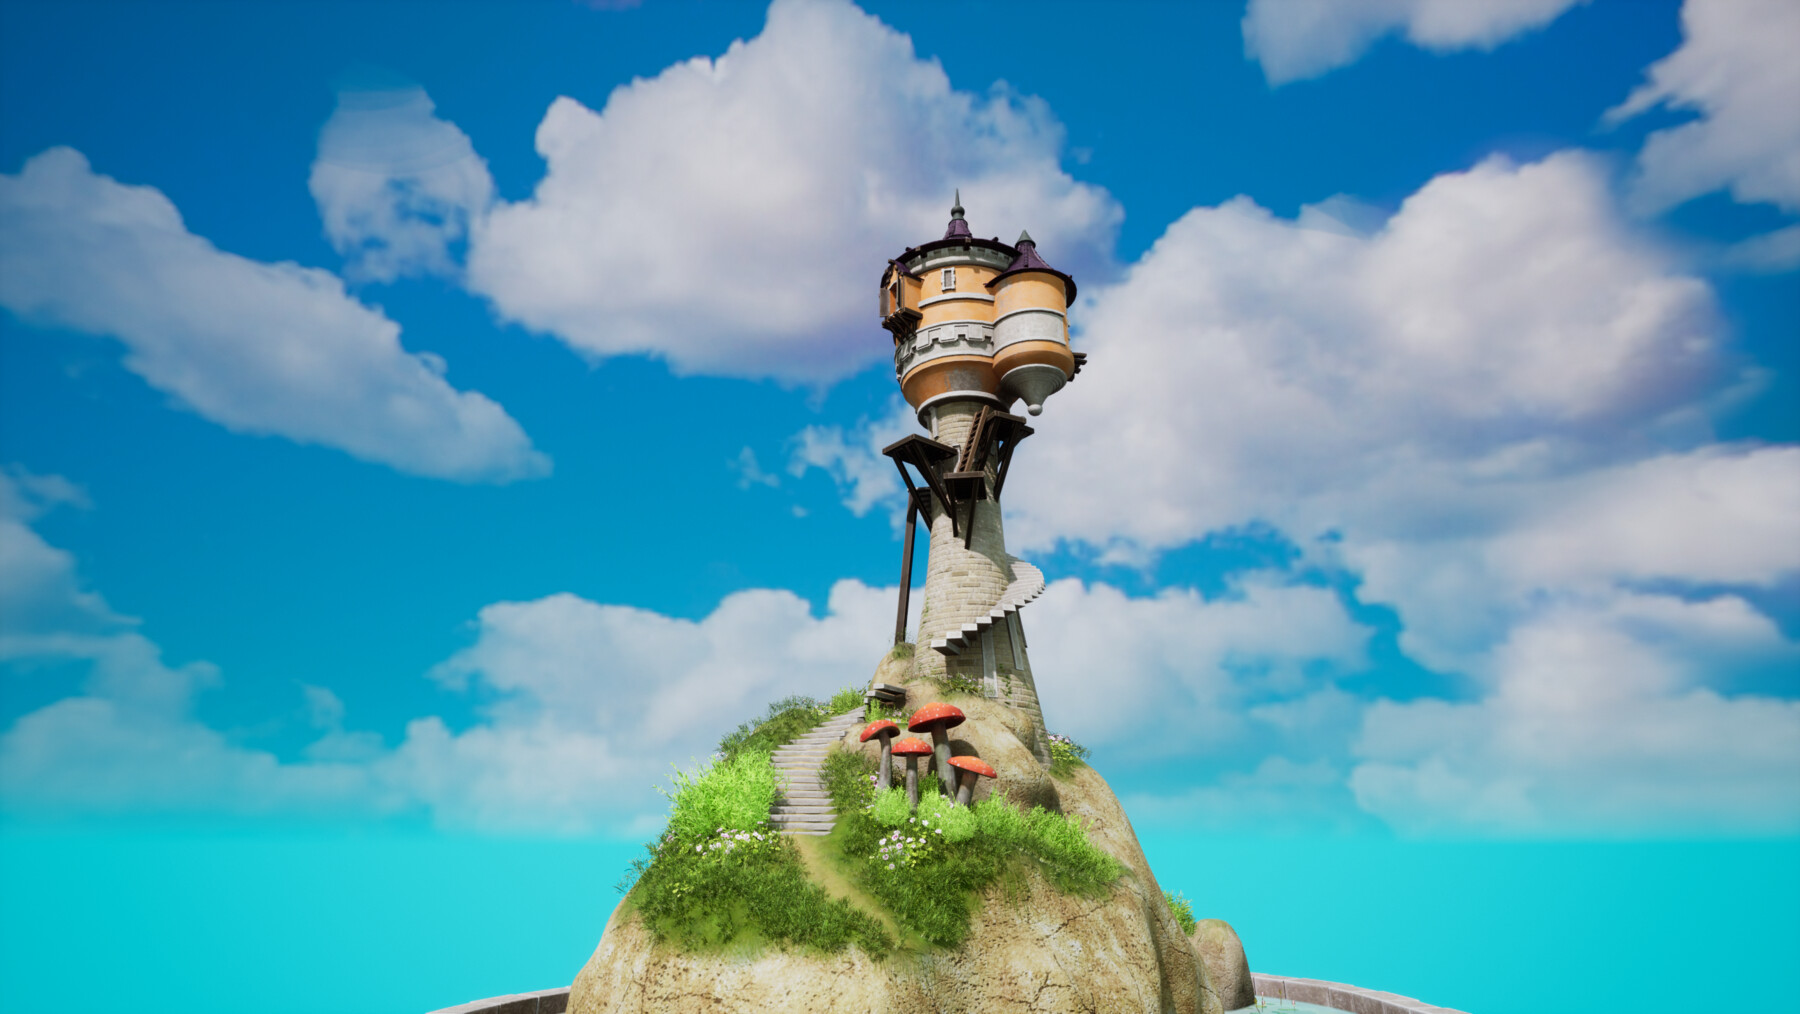 ArtStation - Witcher 3 Longlocks Tower Fan Art Blender & UE5 Complete ...